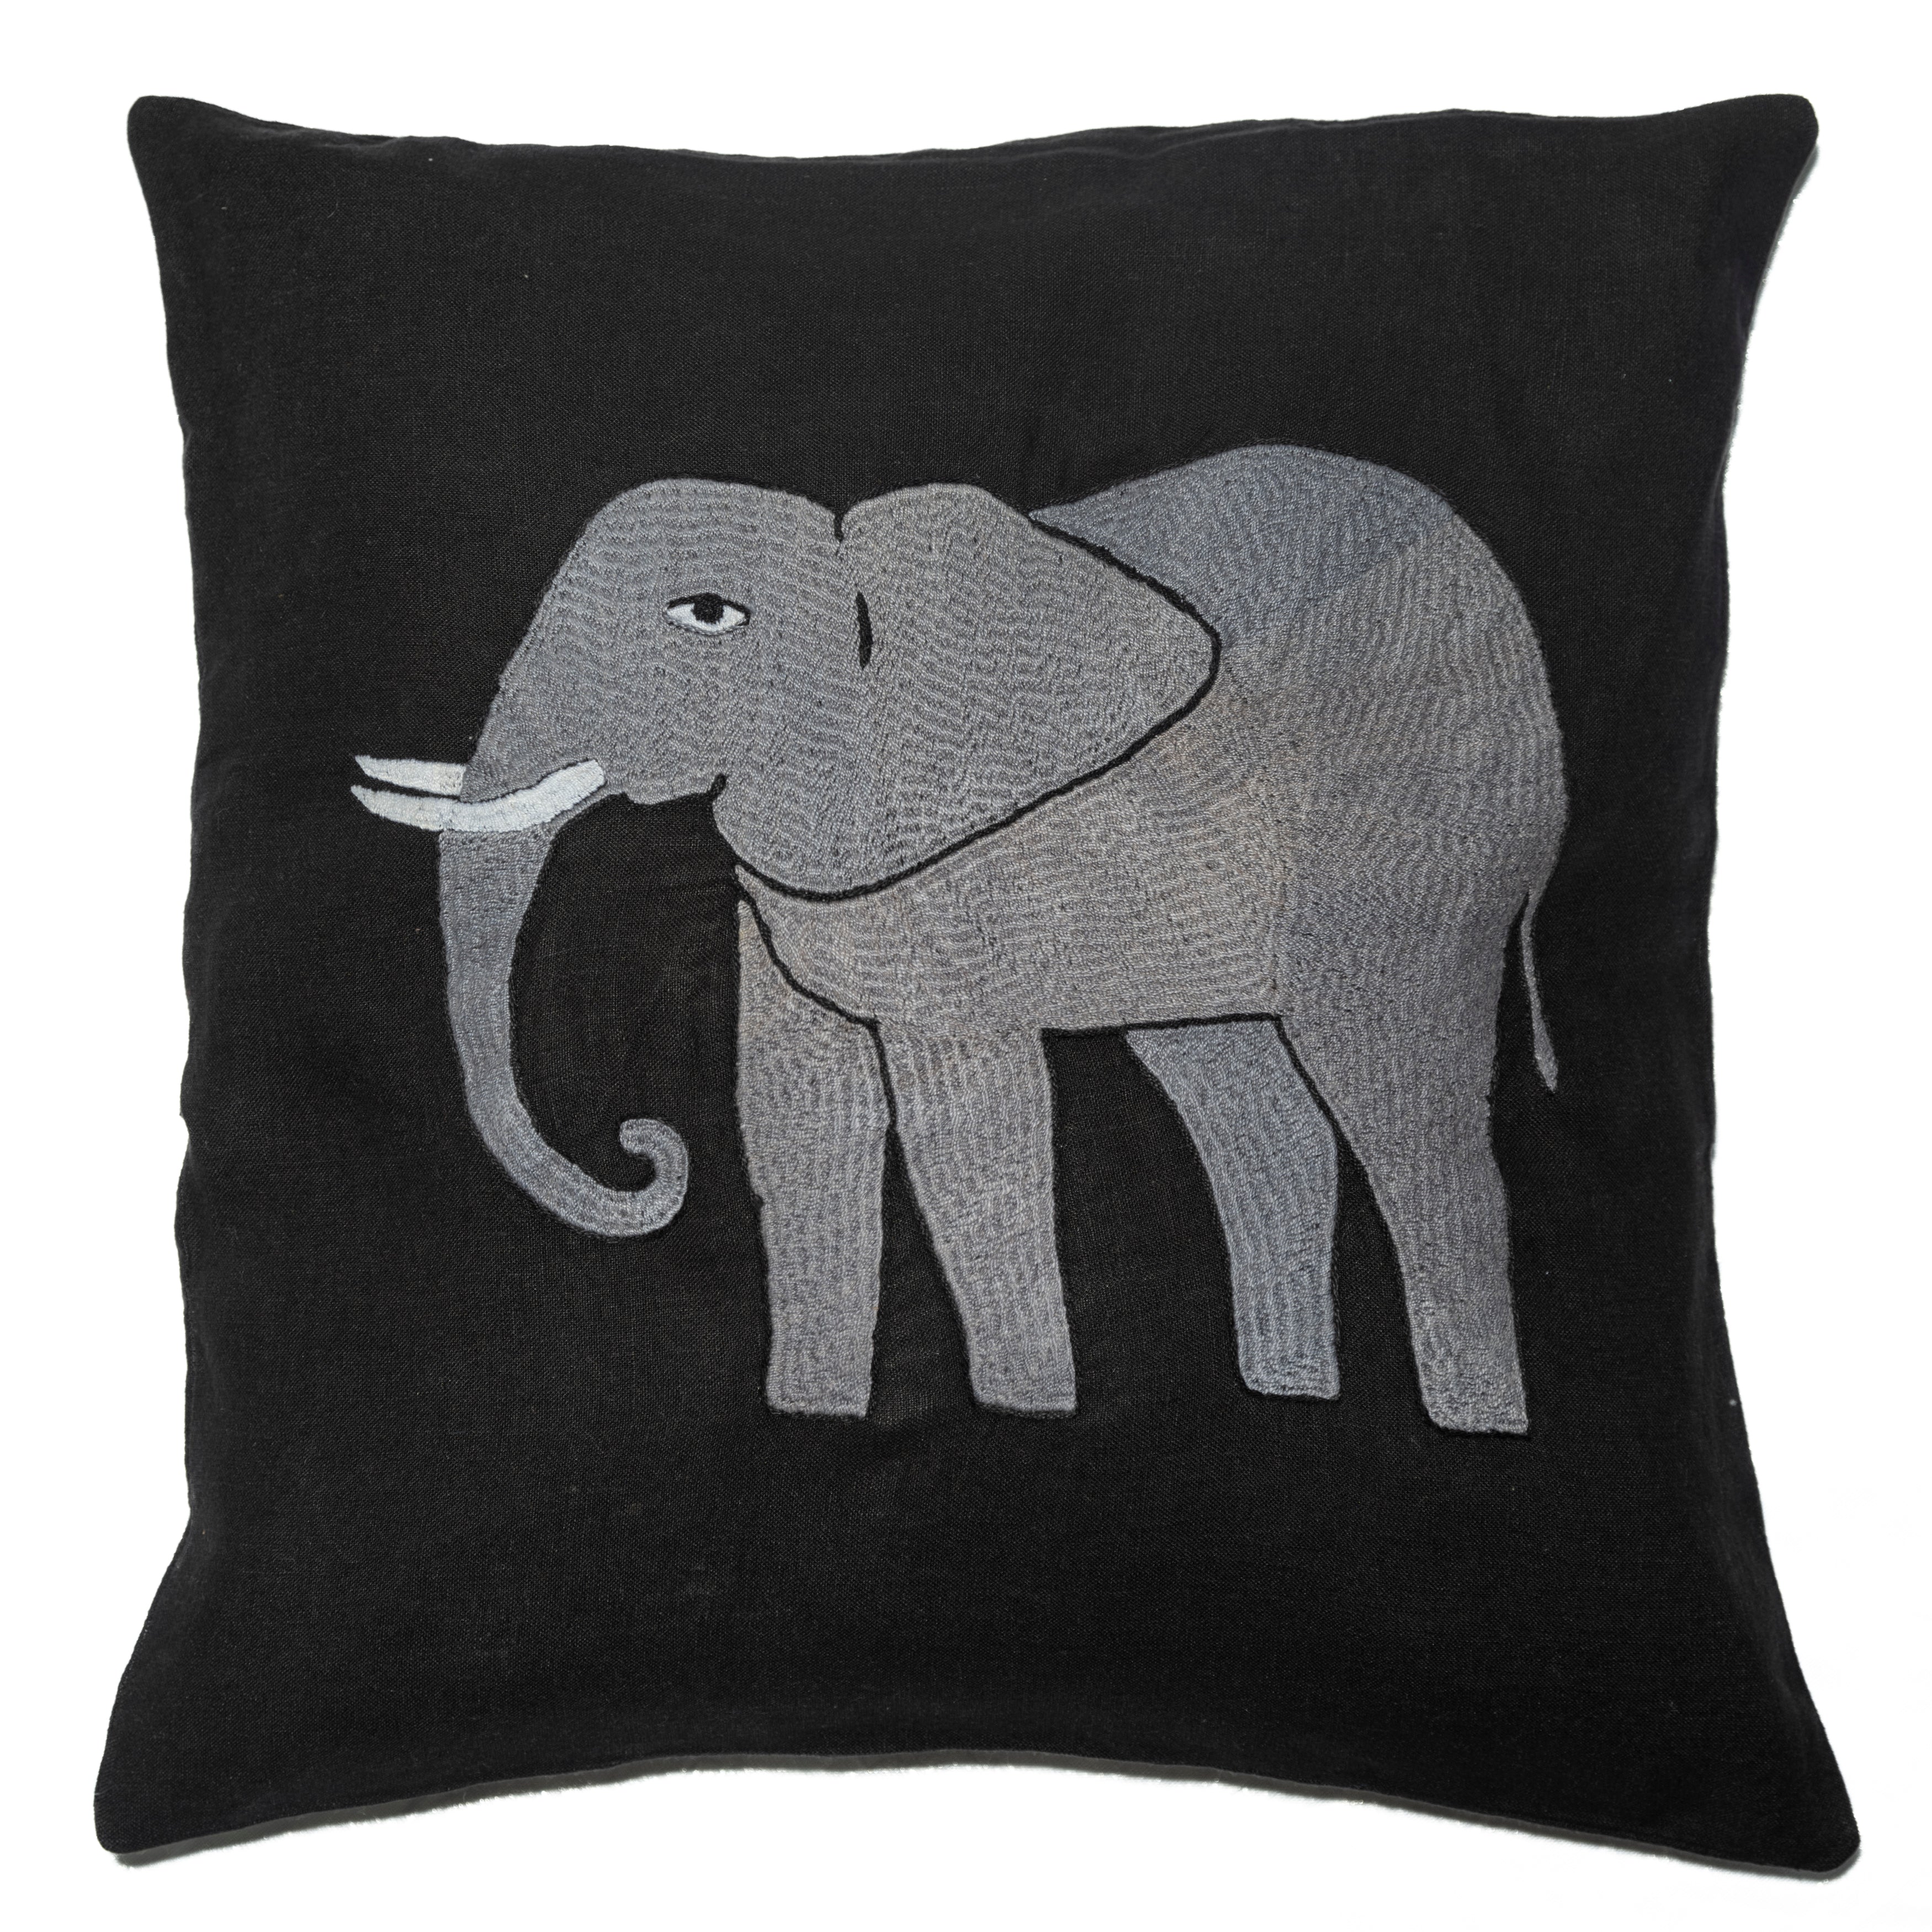 Elephant pillow on black linen